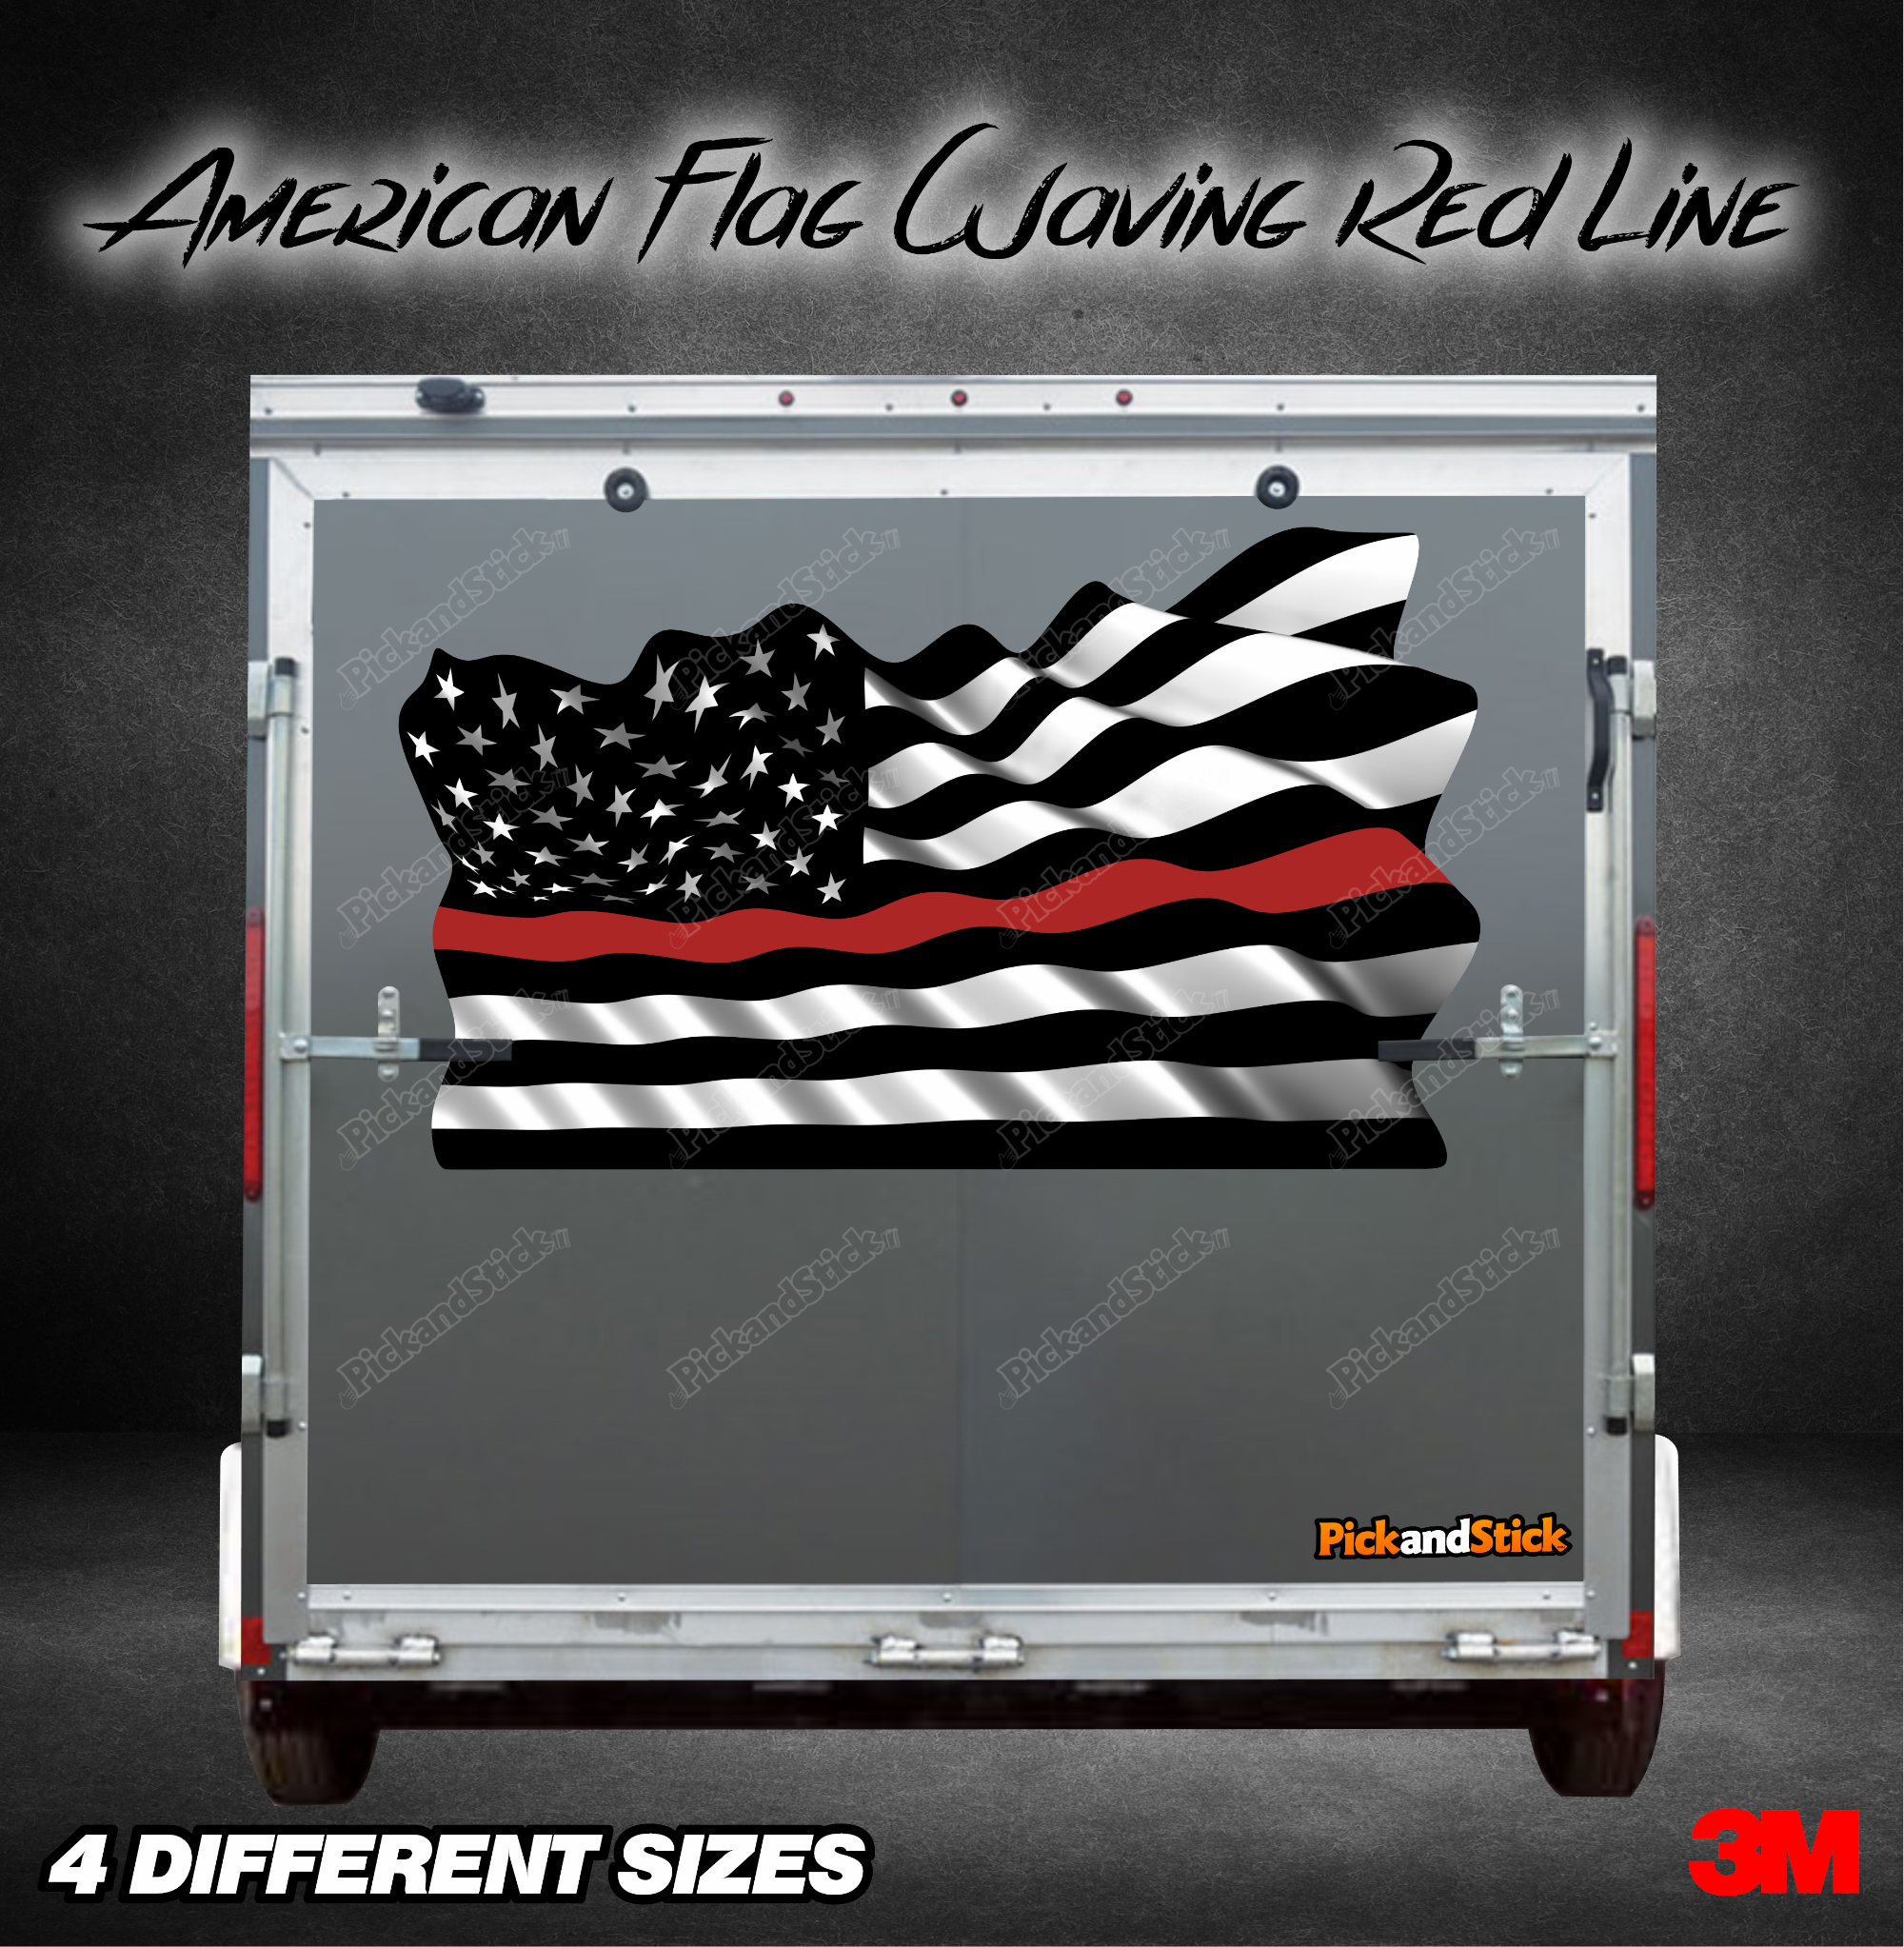 American Flag Waving Red Line Graphic - PickandStickcom